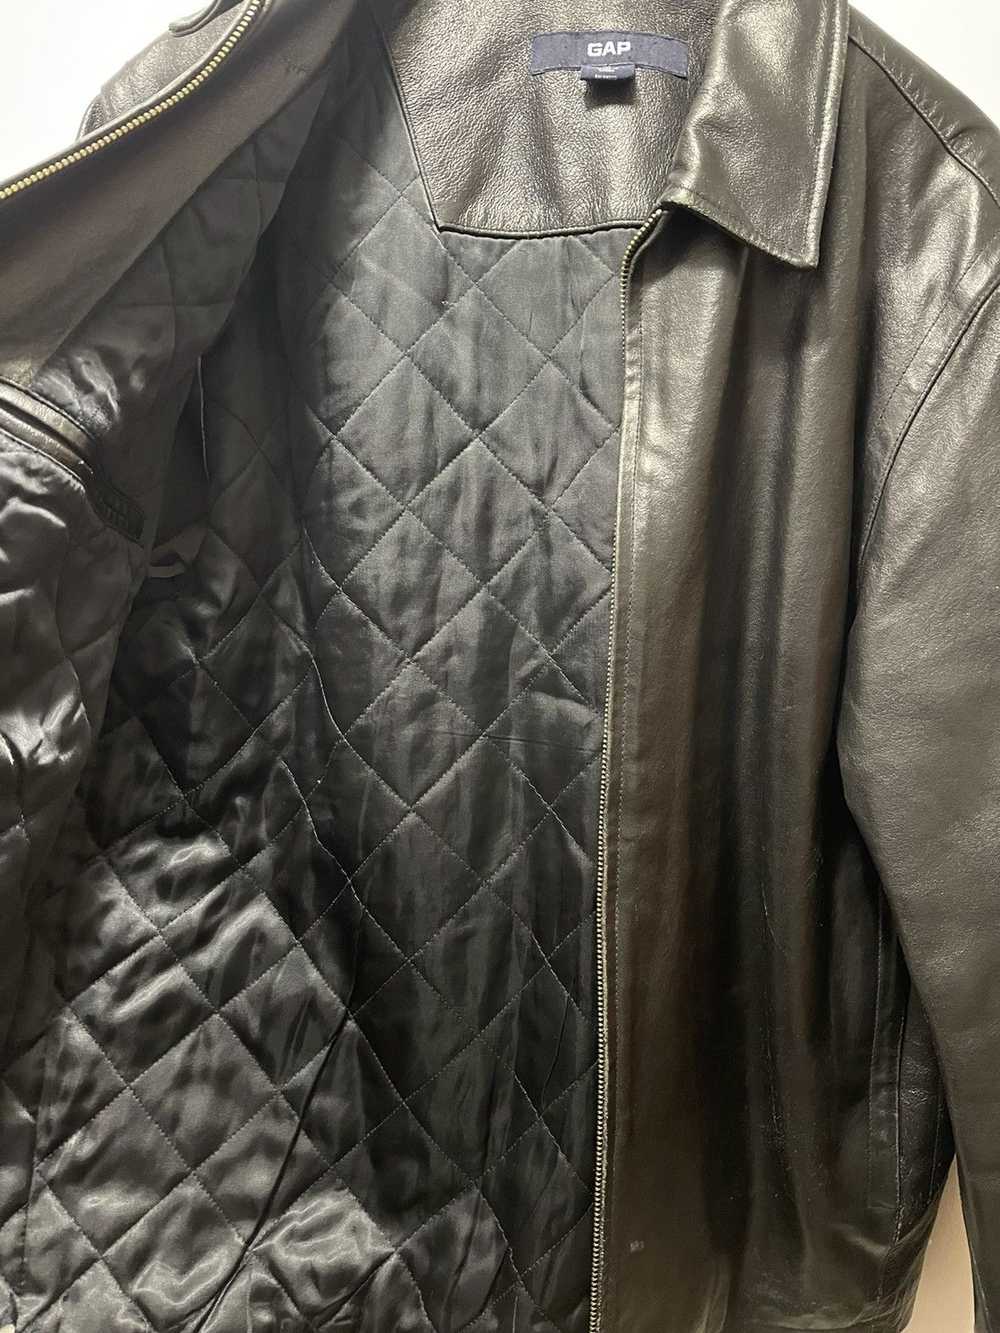 Gap × Vintage Vintage Leather Jacket - image 6